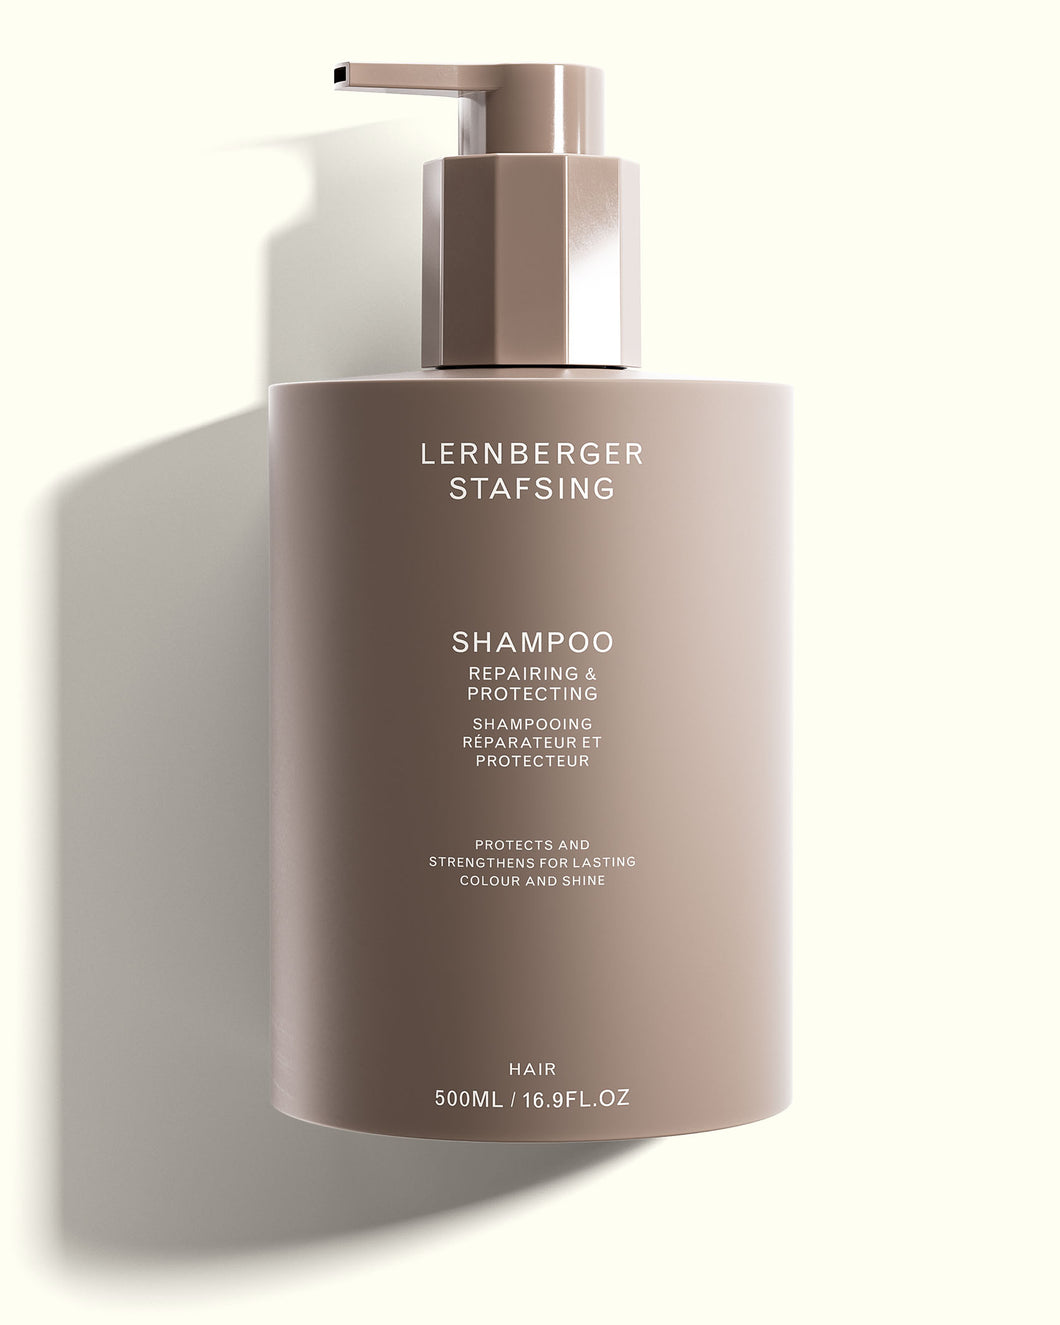 Shampoo Repairing & Protecting, 500ml